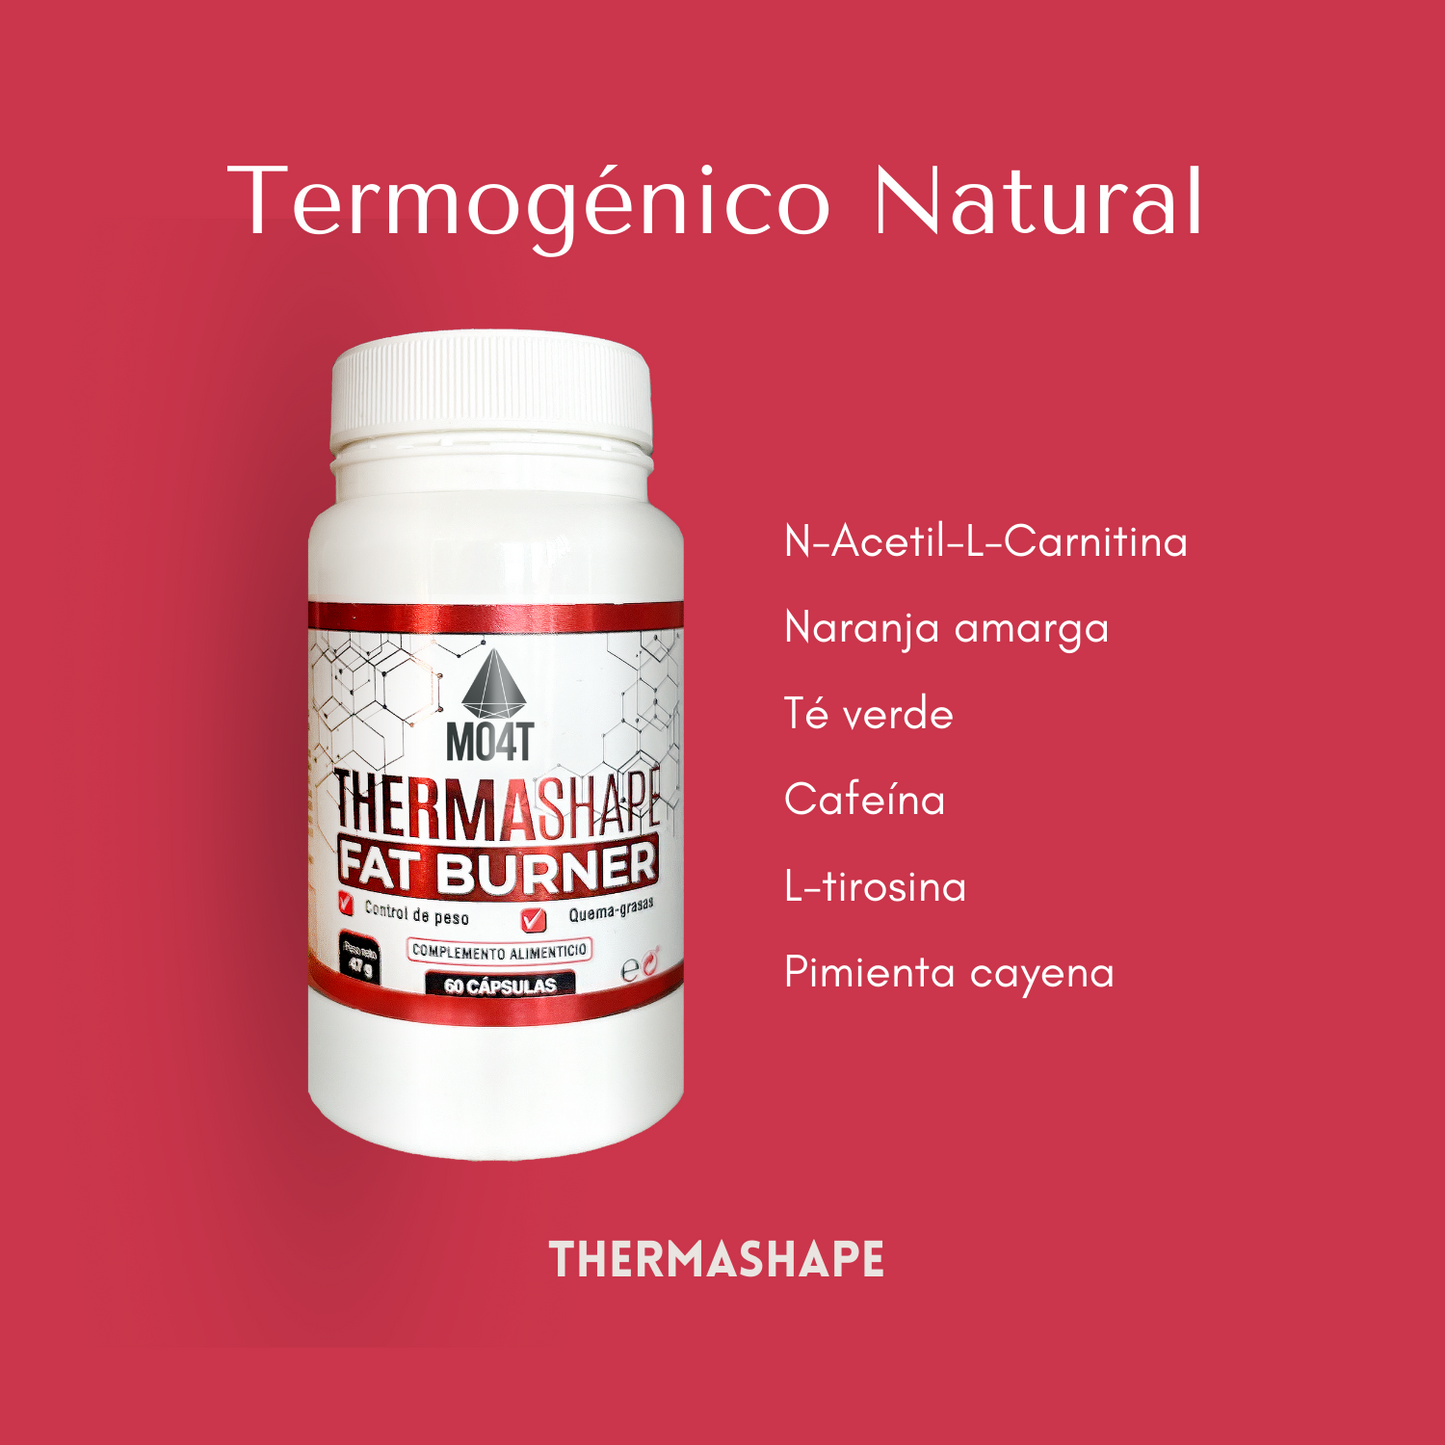 THERMASHAPE - Natural Thermogenic